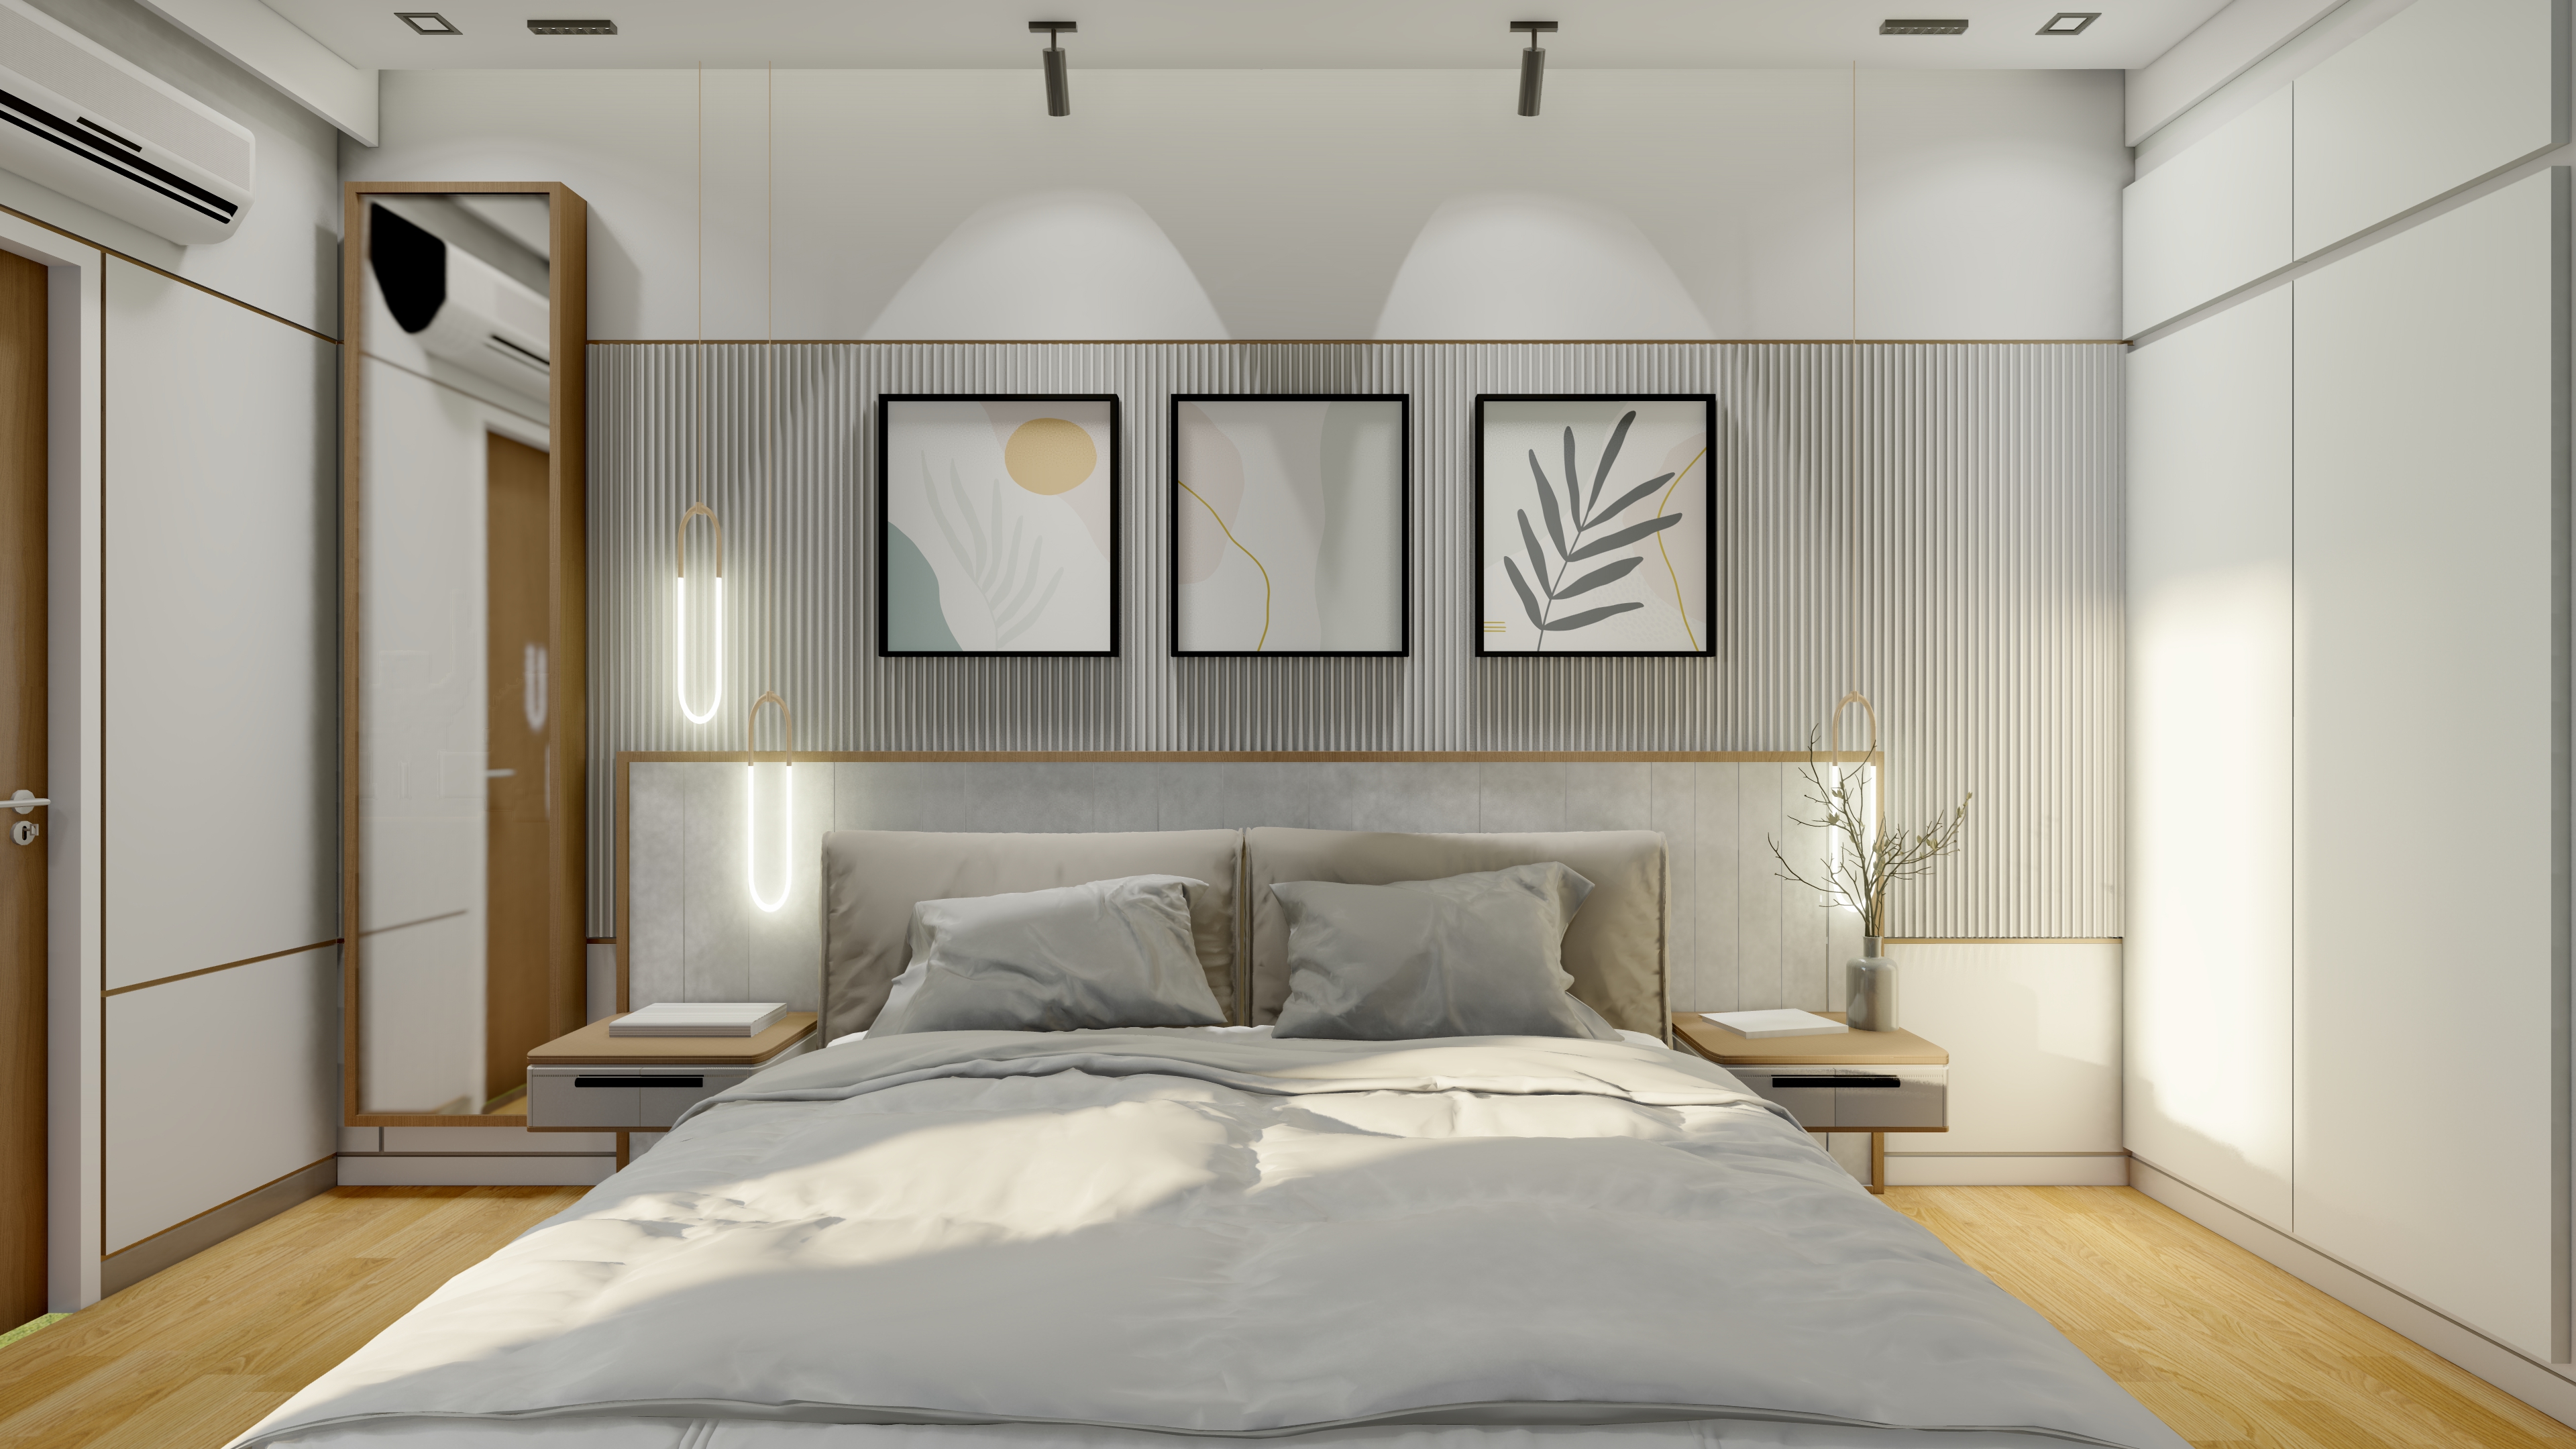 Bedroom Design With Wall Art